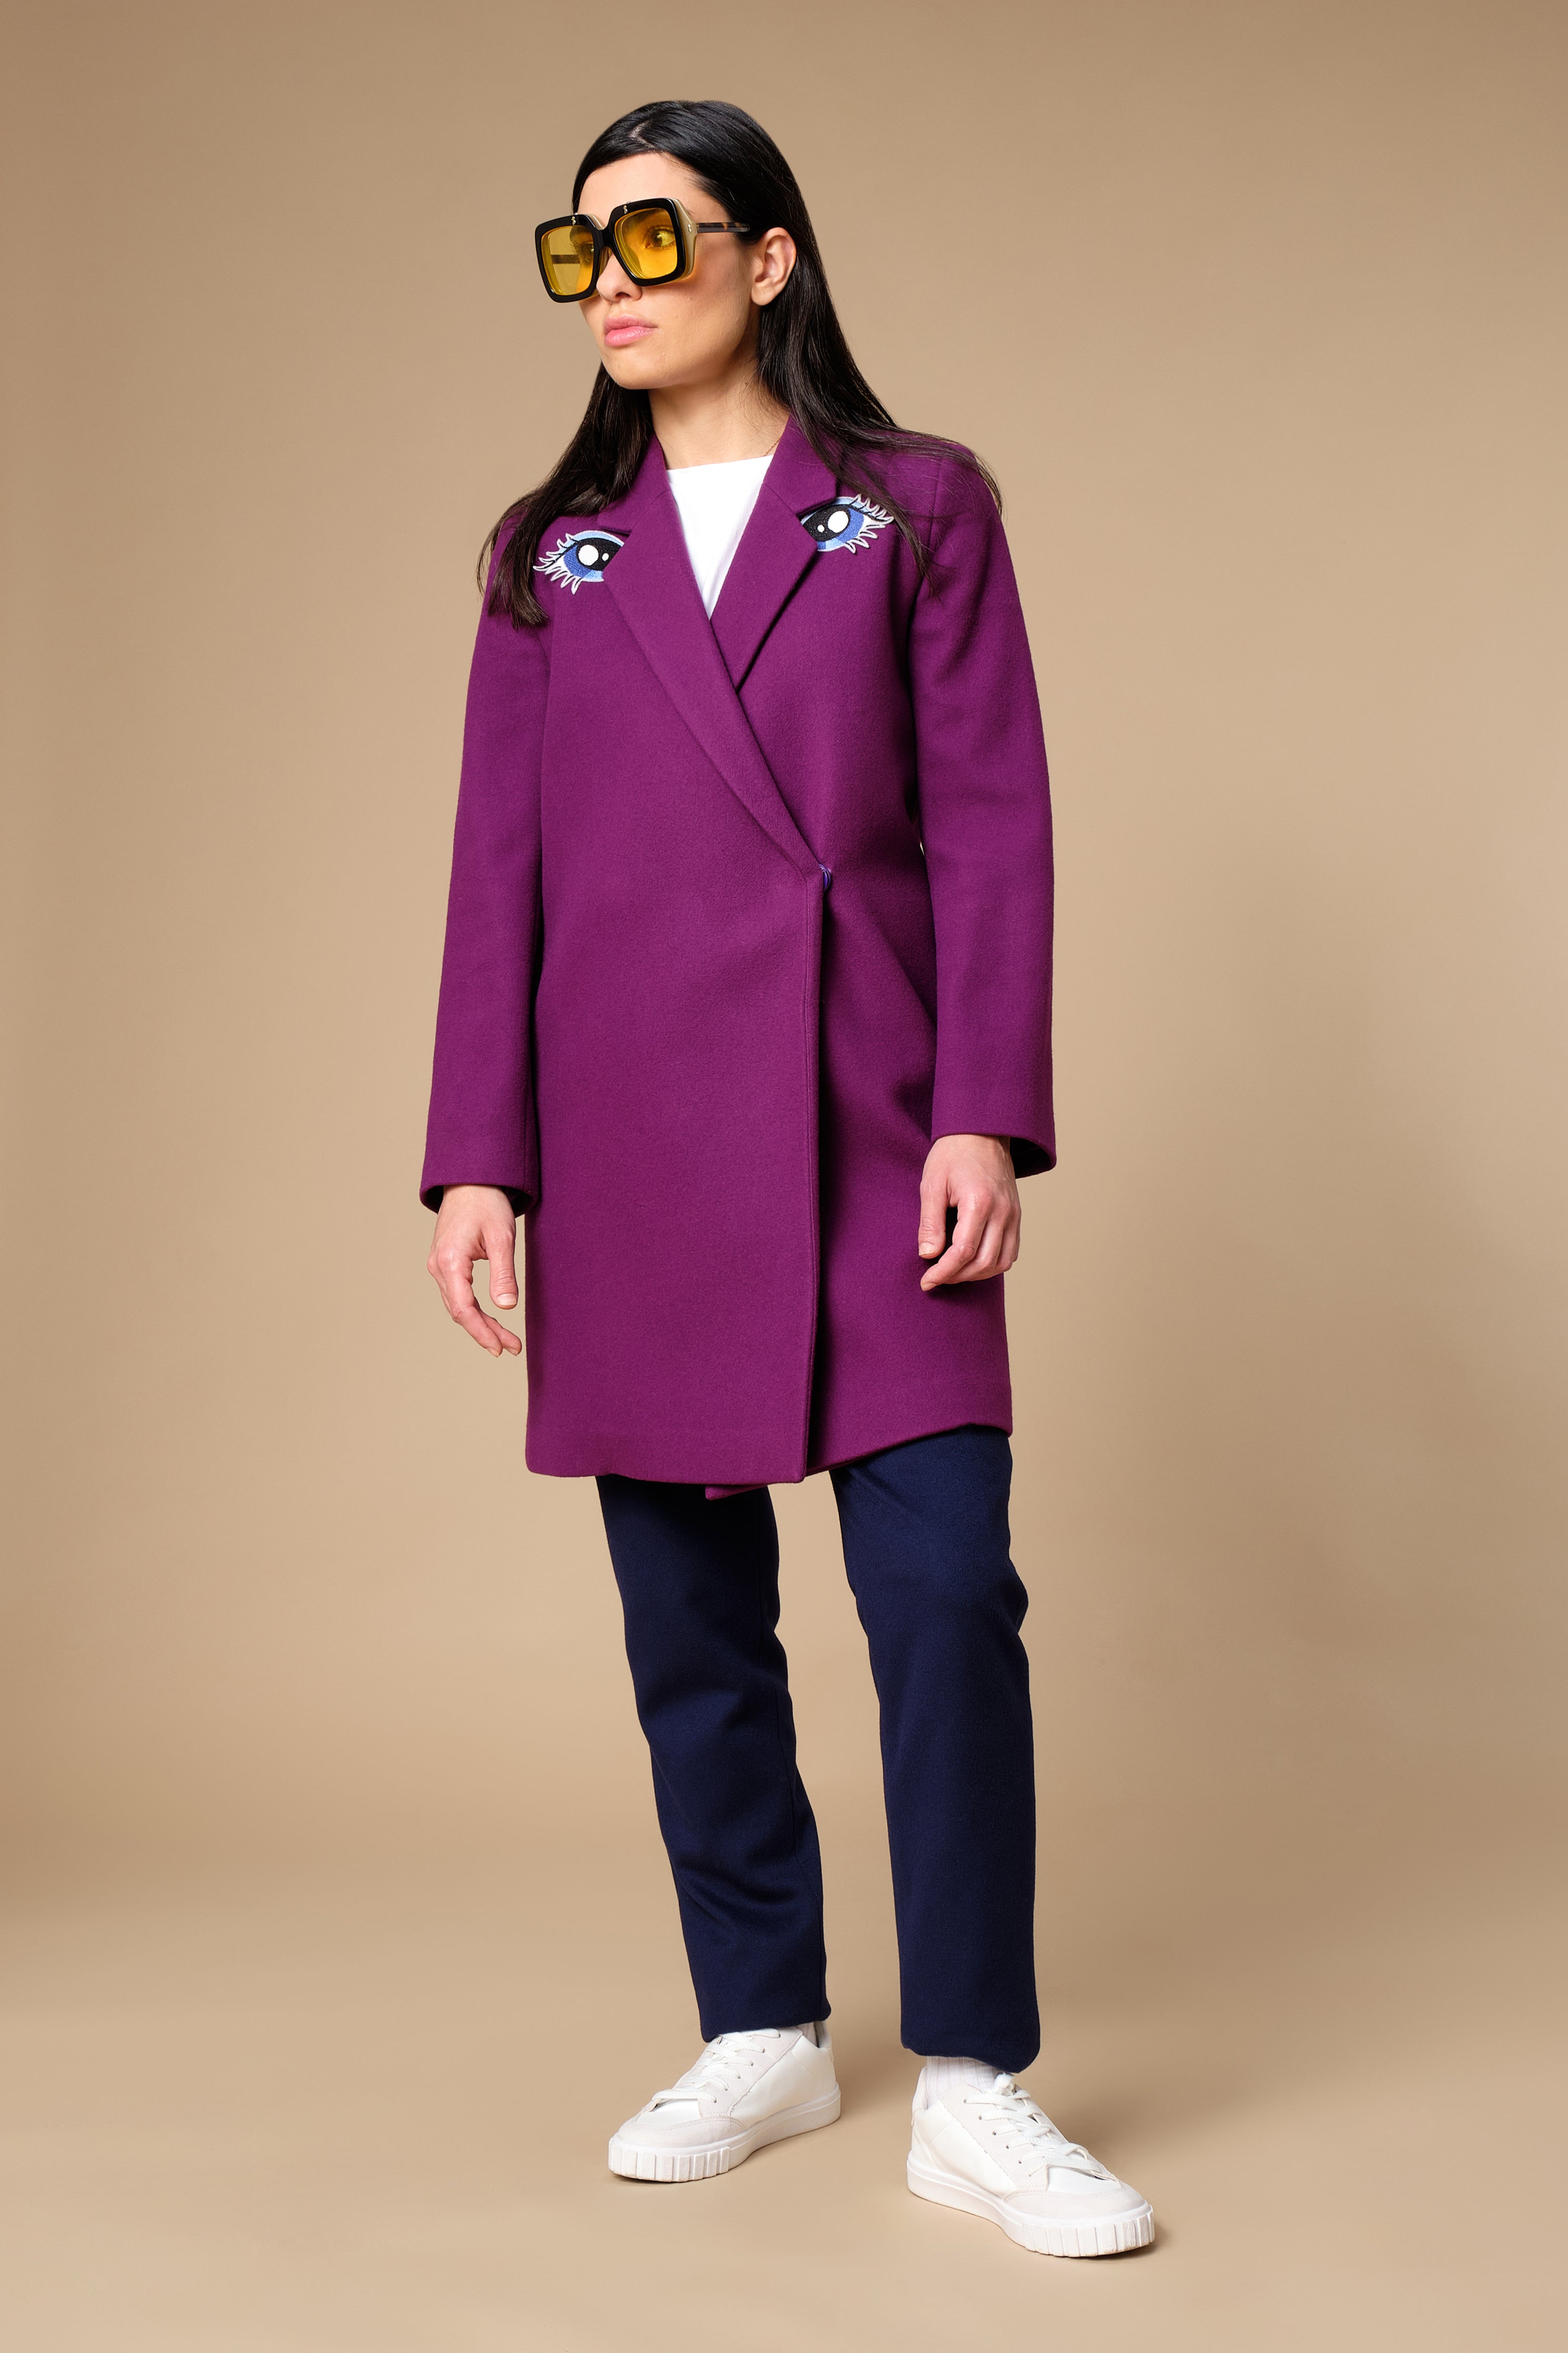 stillsveta purple wool coat with blue eyes embroidery